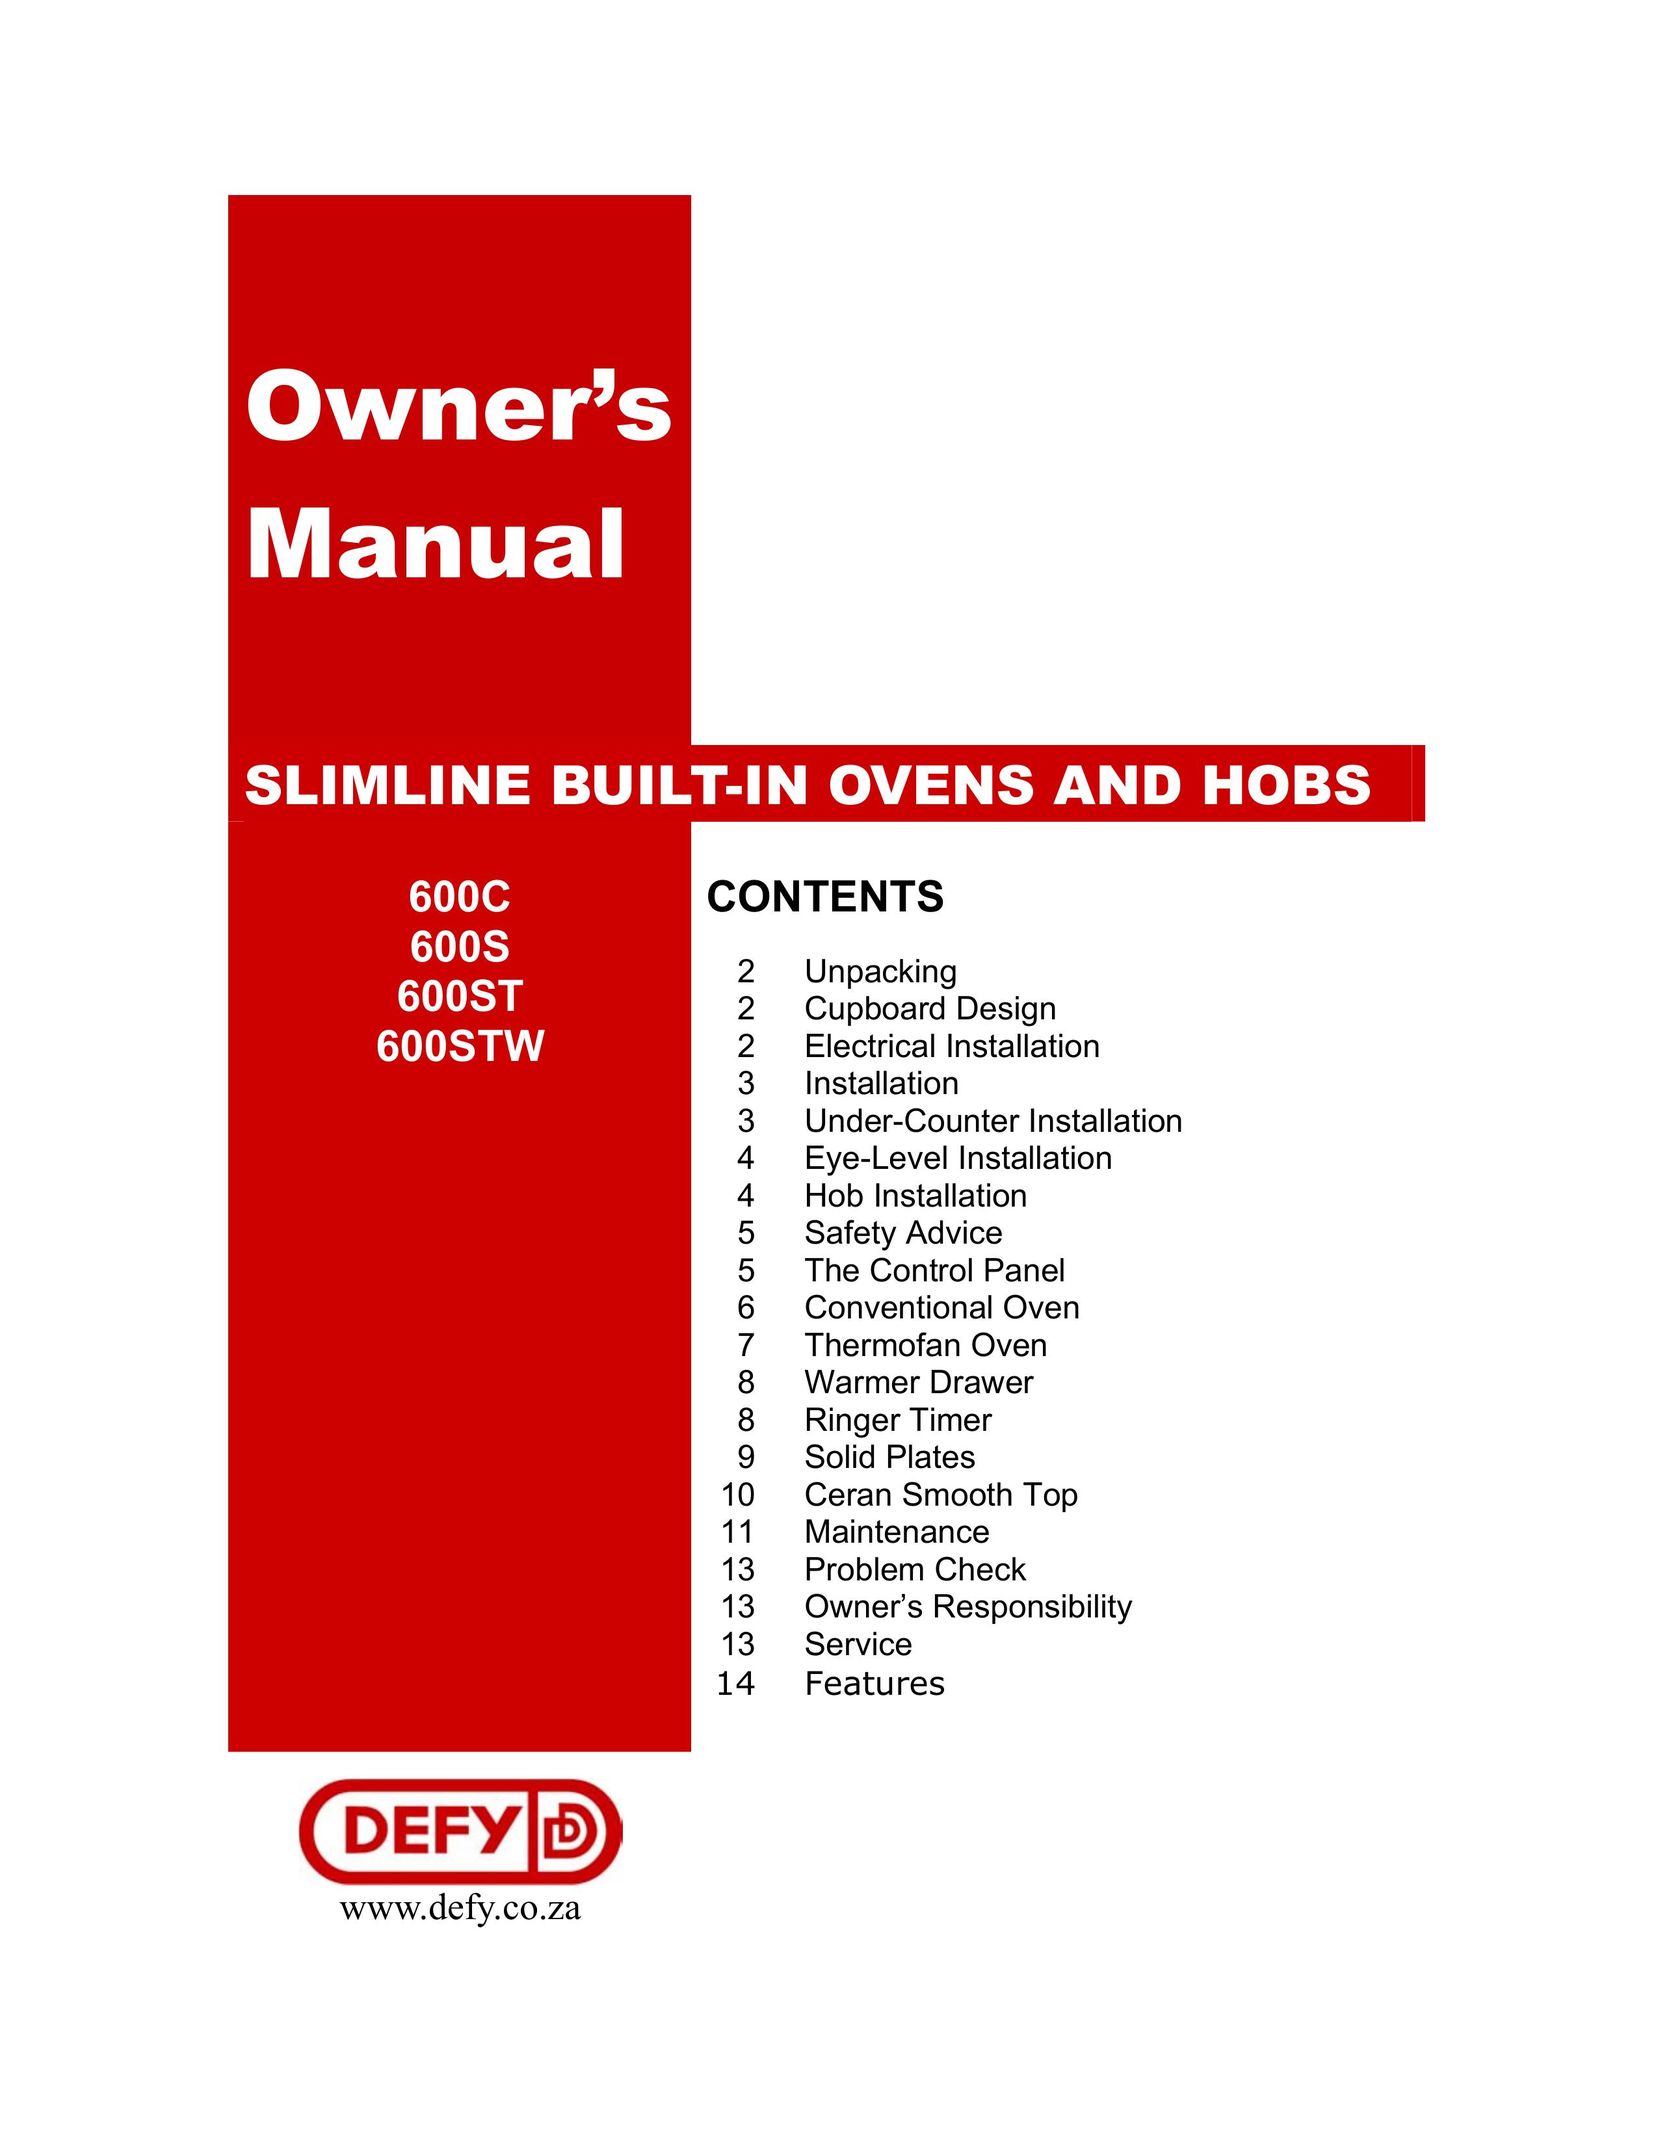 Defy Appliances 600STW Oven User Manual